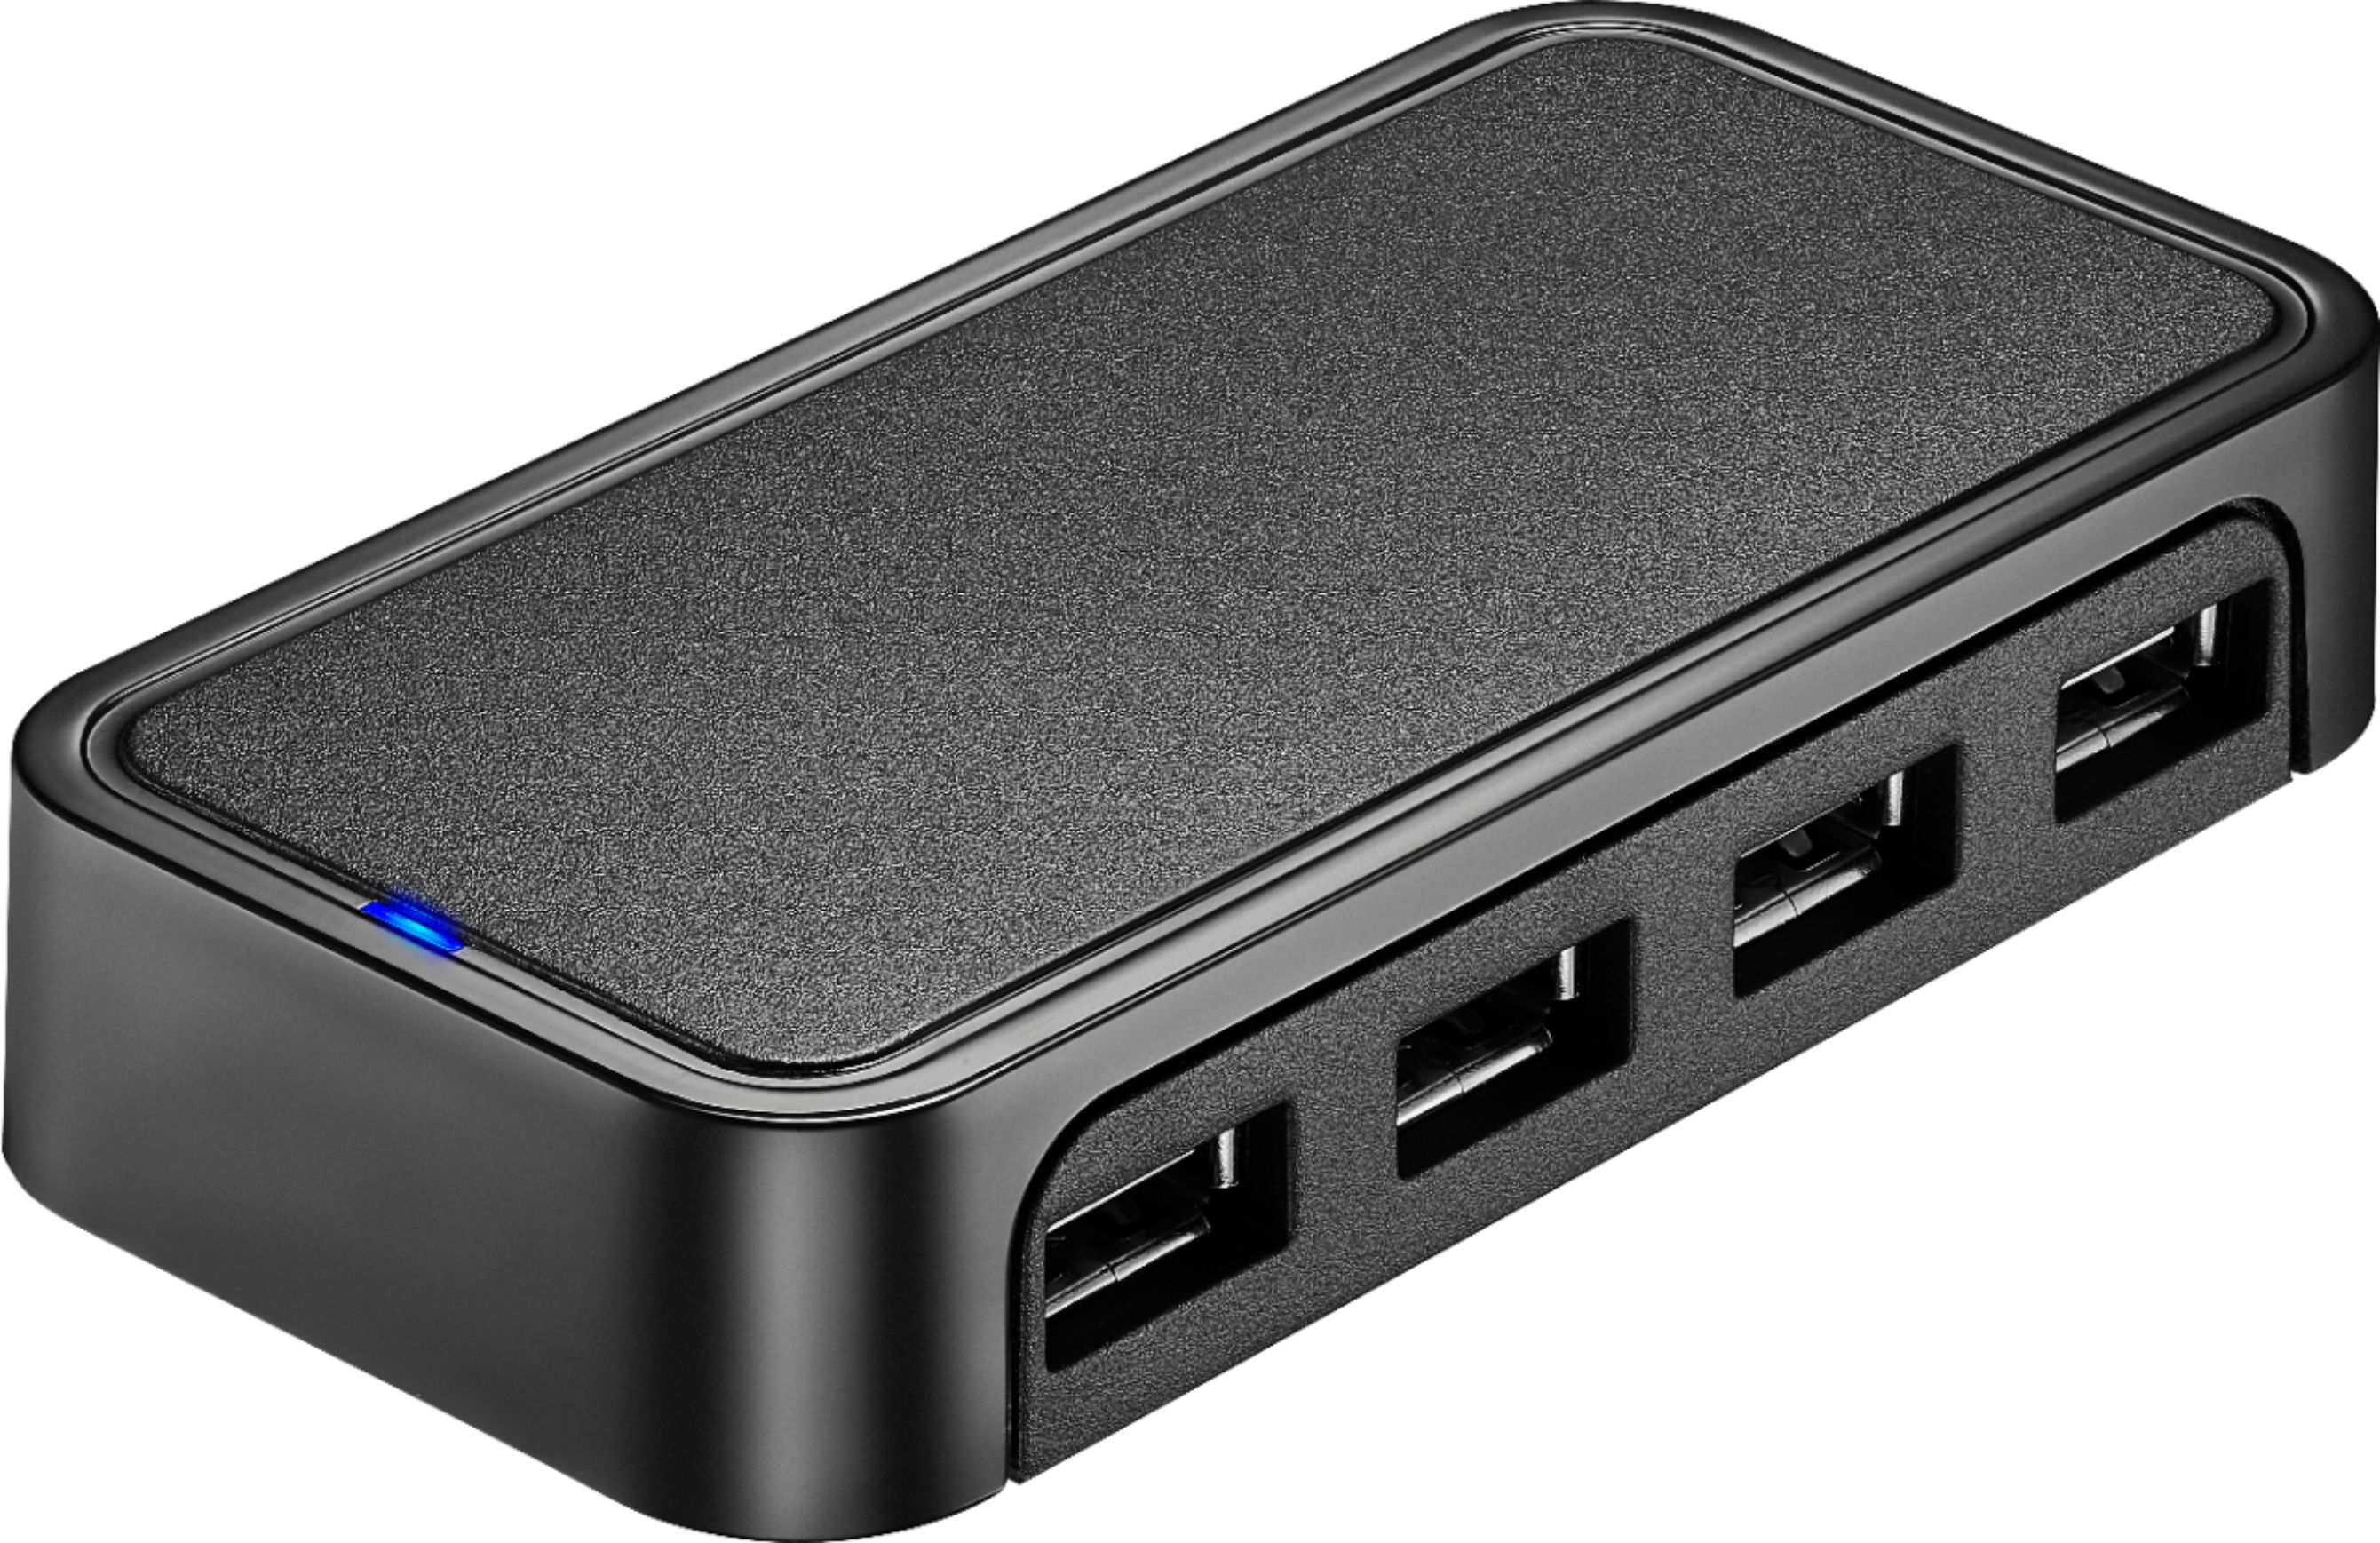 Hub USB 2.0 – 4 Ports USB – Plug and Play – Multiprise USB (Gris